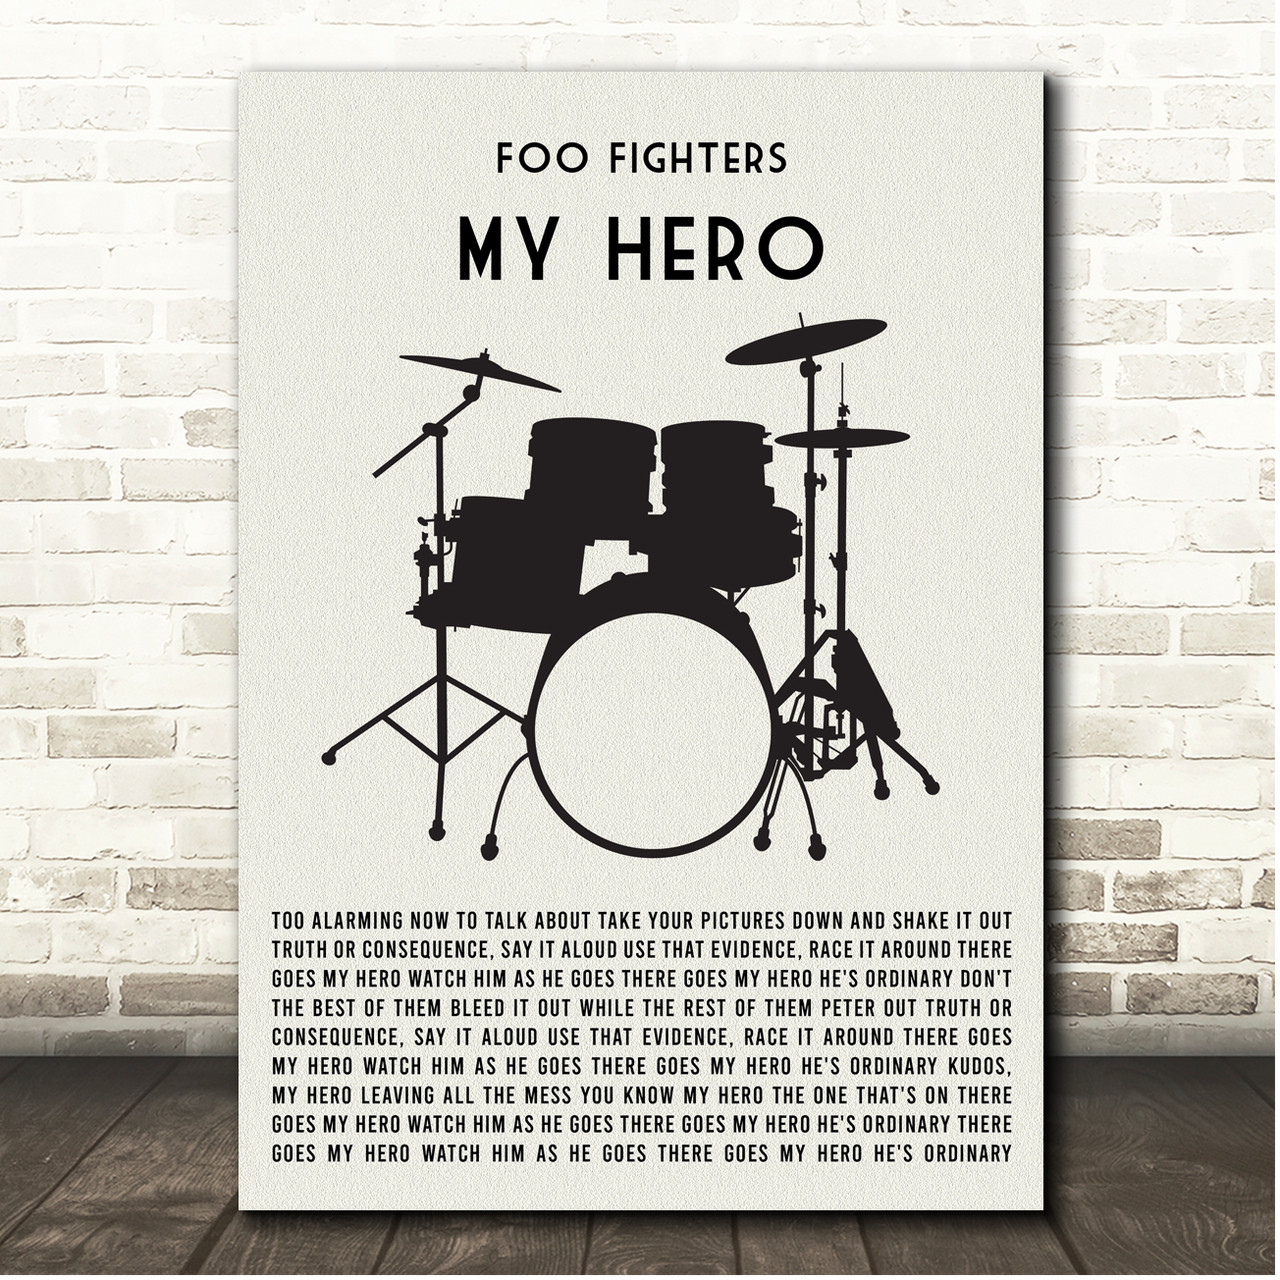 my hero foo fighters lyrics 